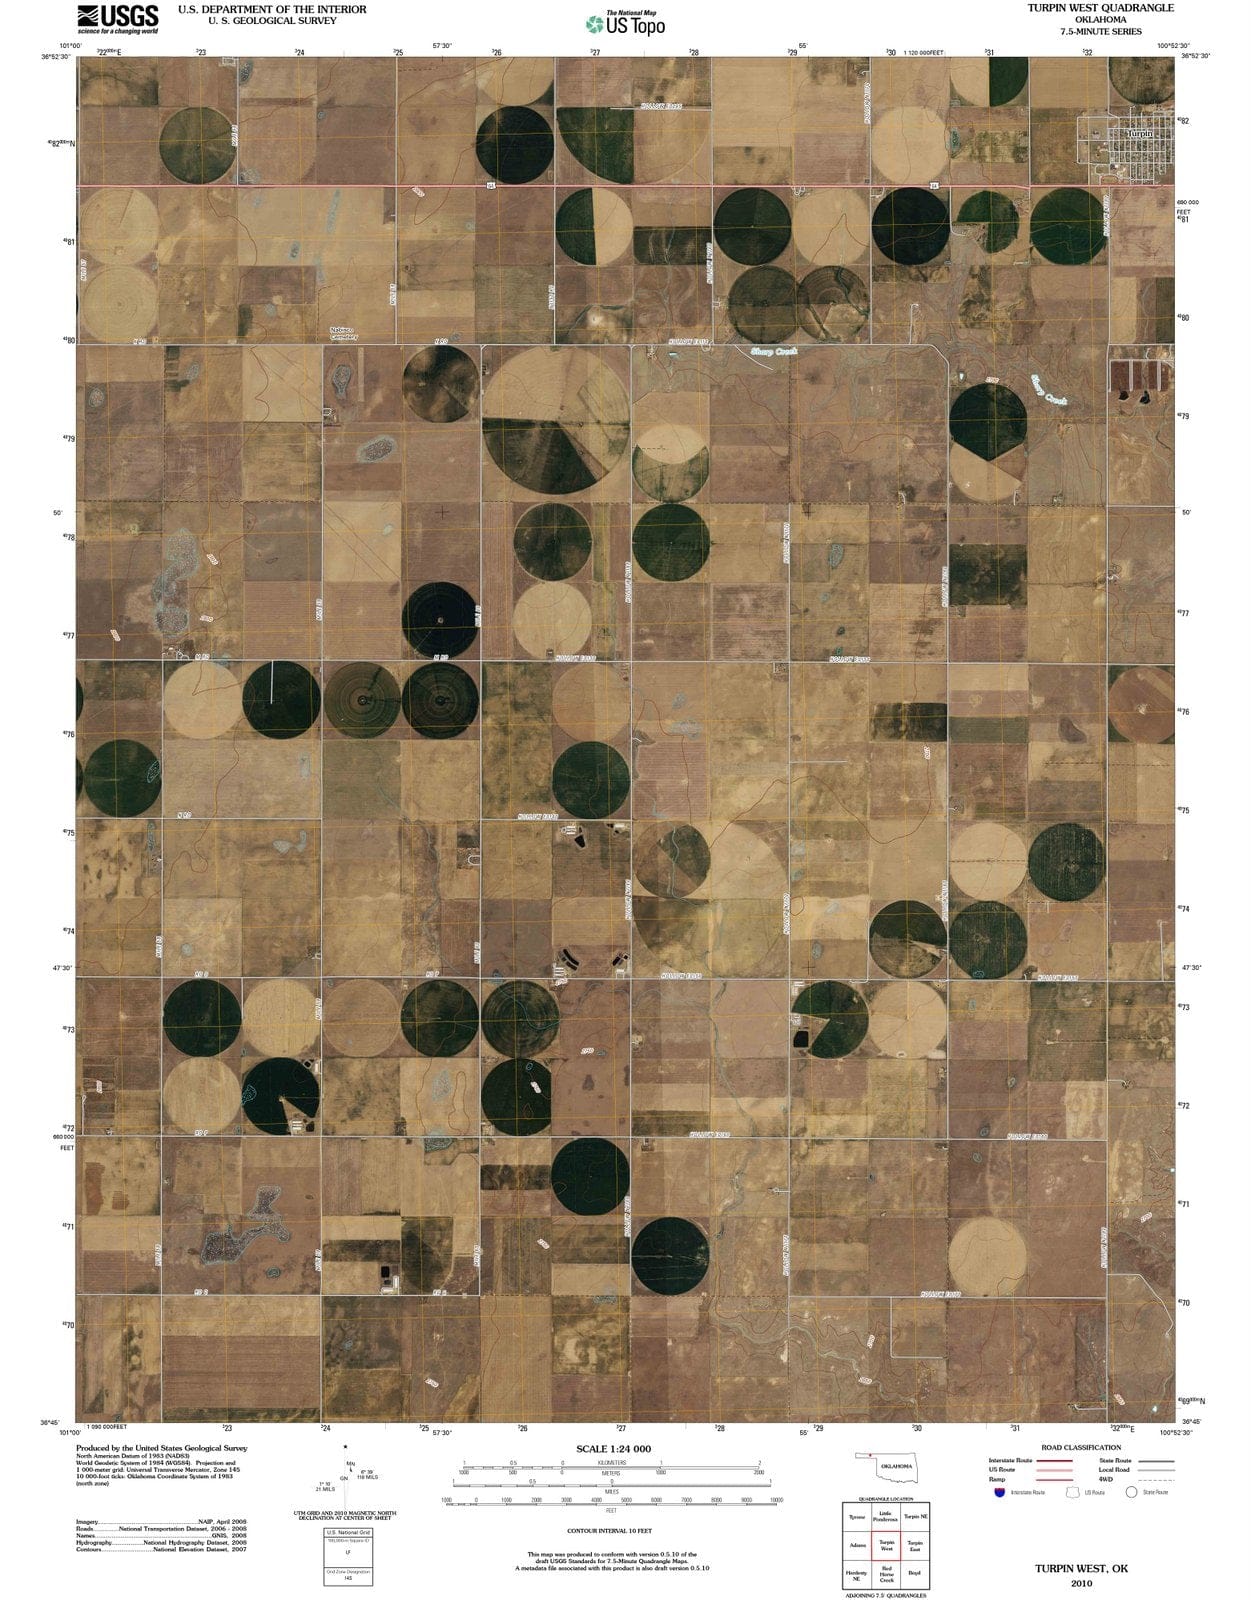 2010 Turpin West, OK - Oklahoma - USGS Topographic Map